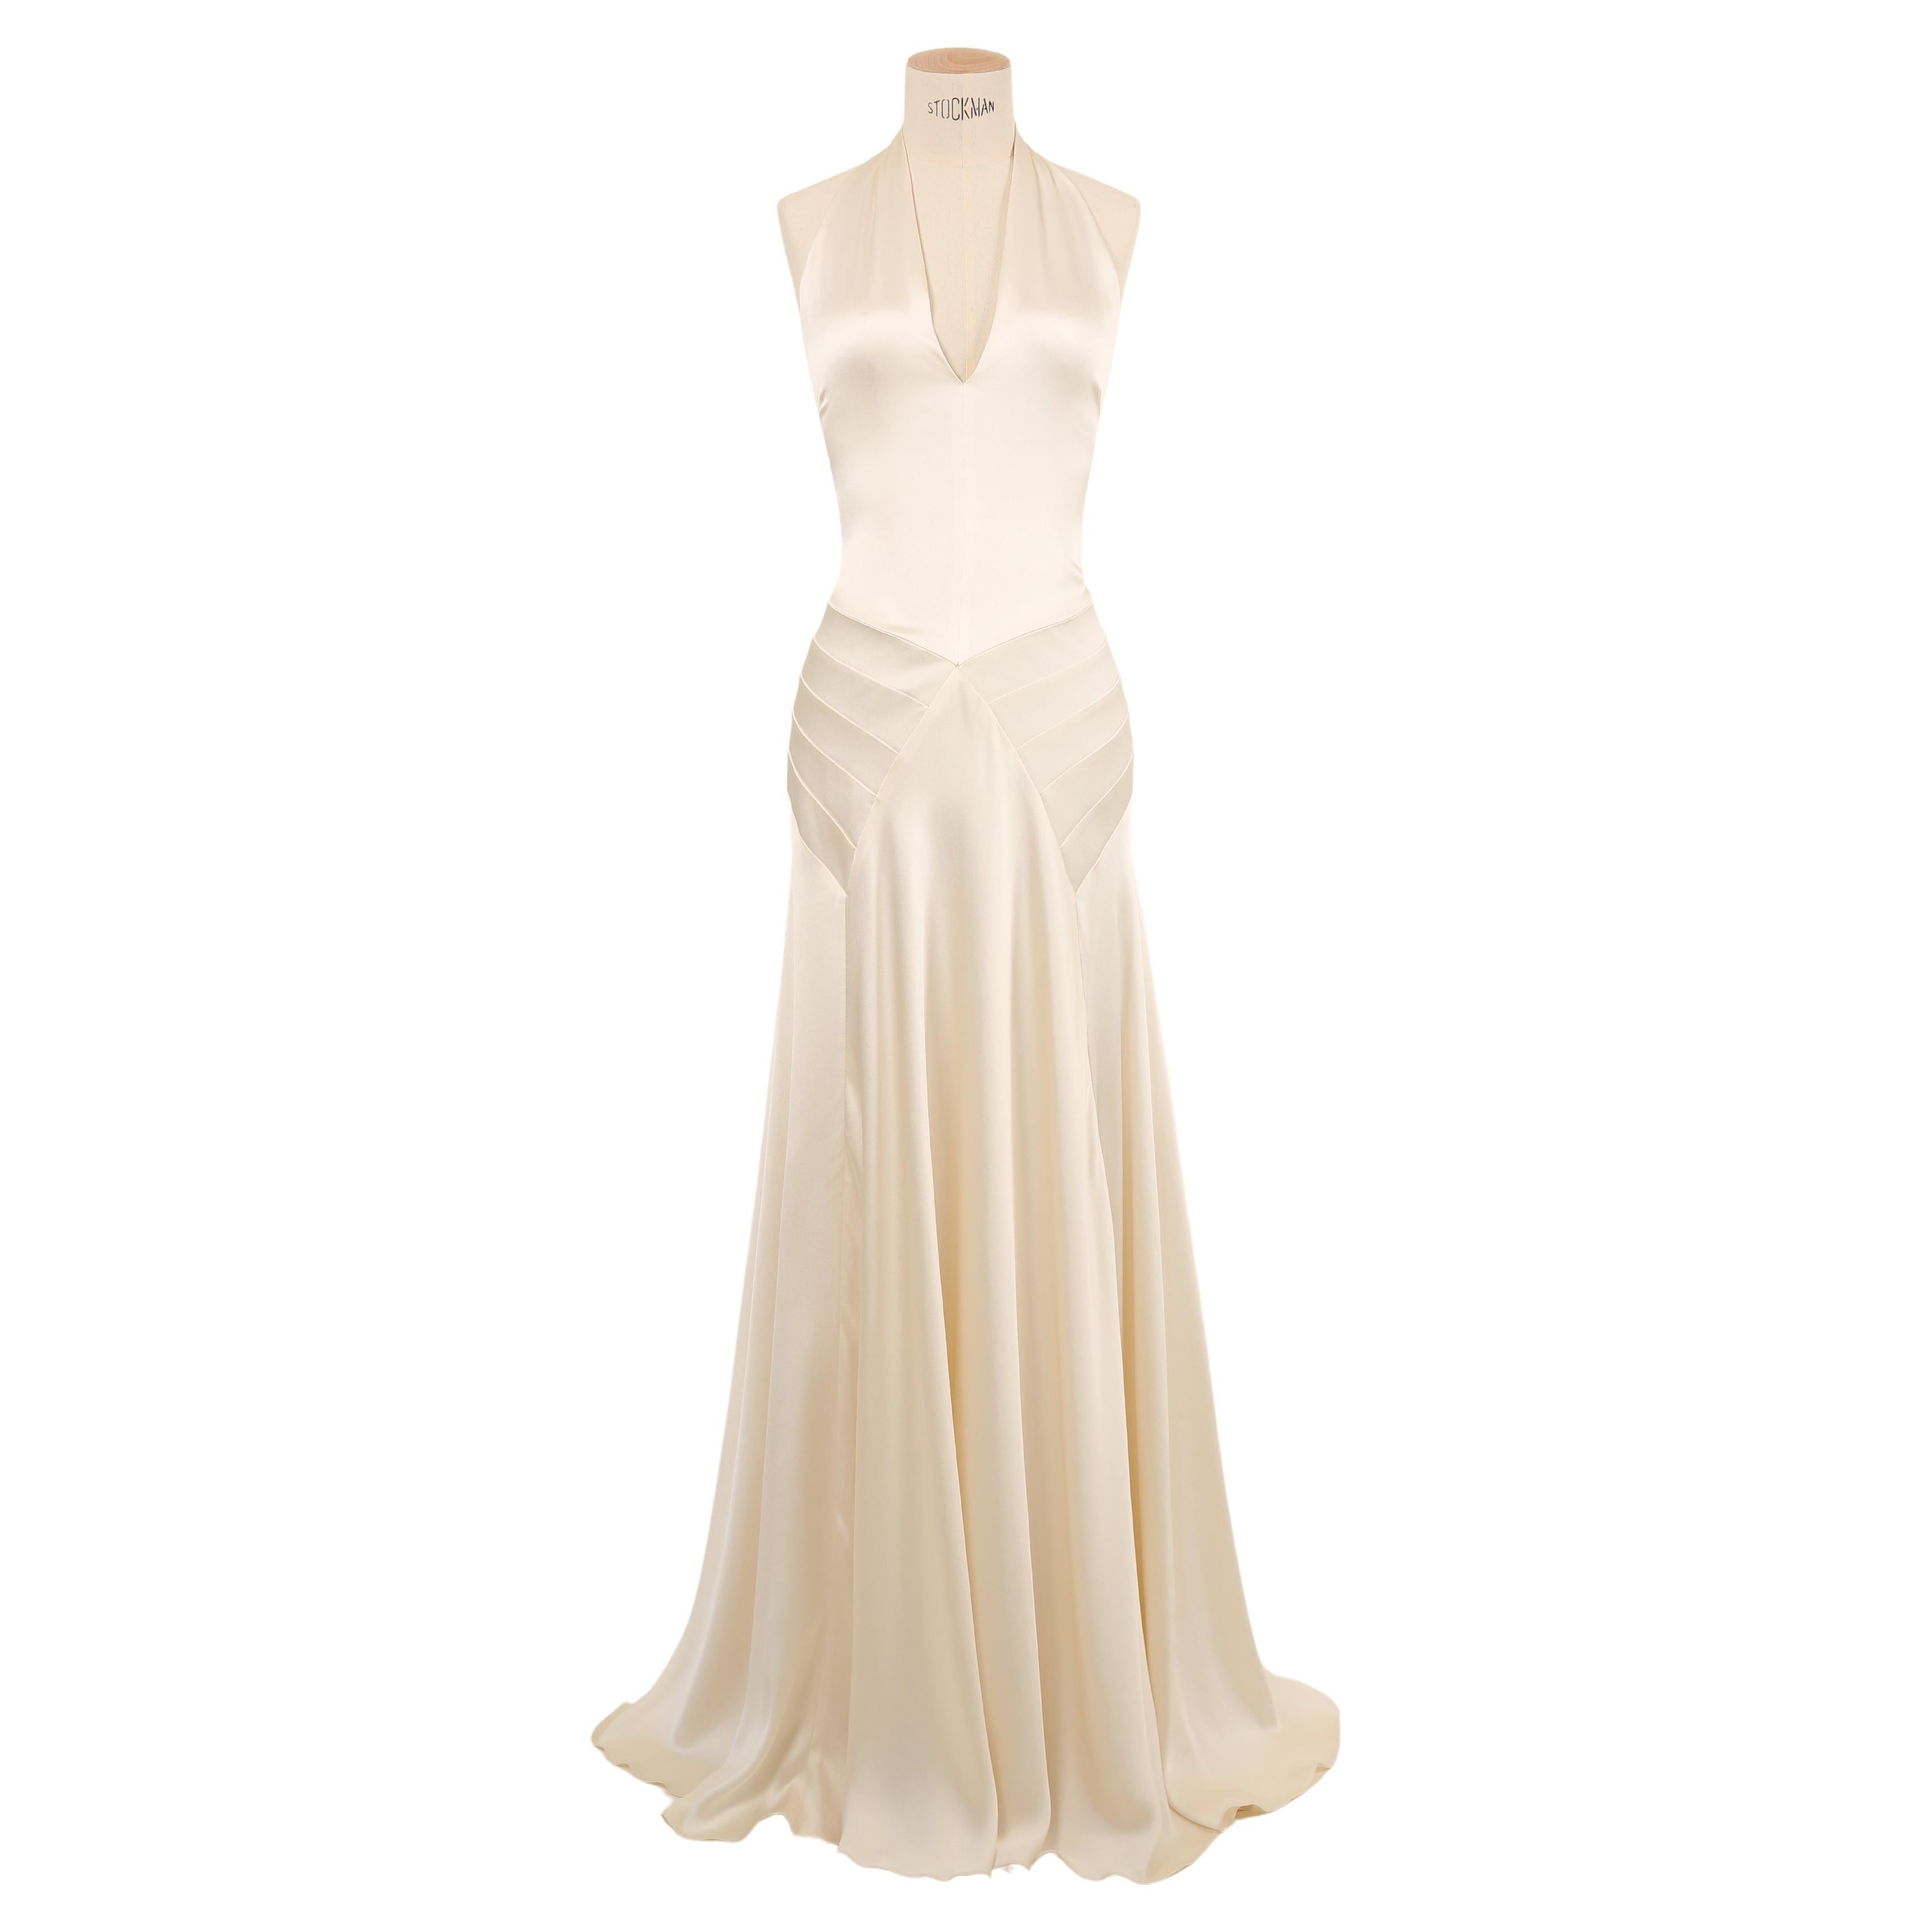 Ralph Lauren S/S 2009 white ivory silk plunging halter neck wedding gown dress For Sale